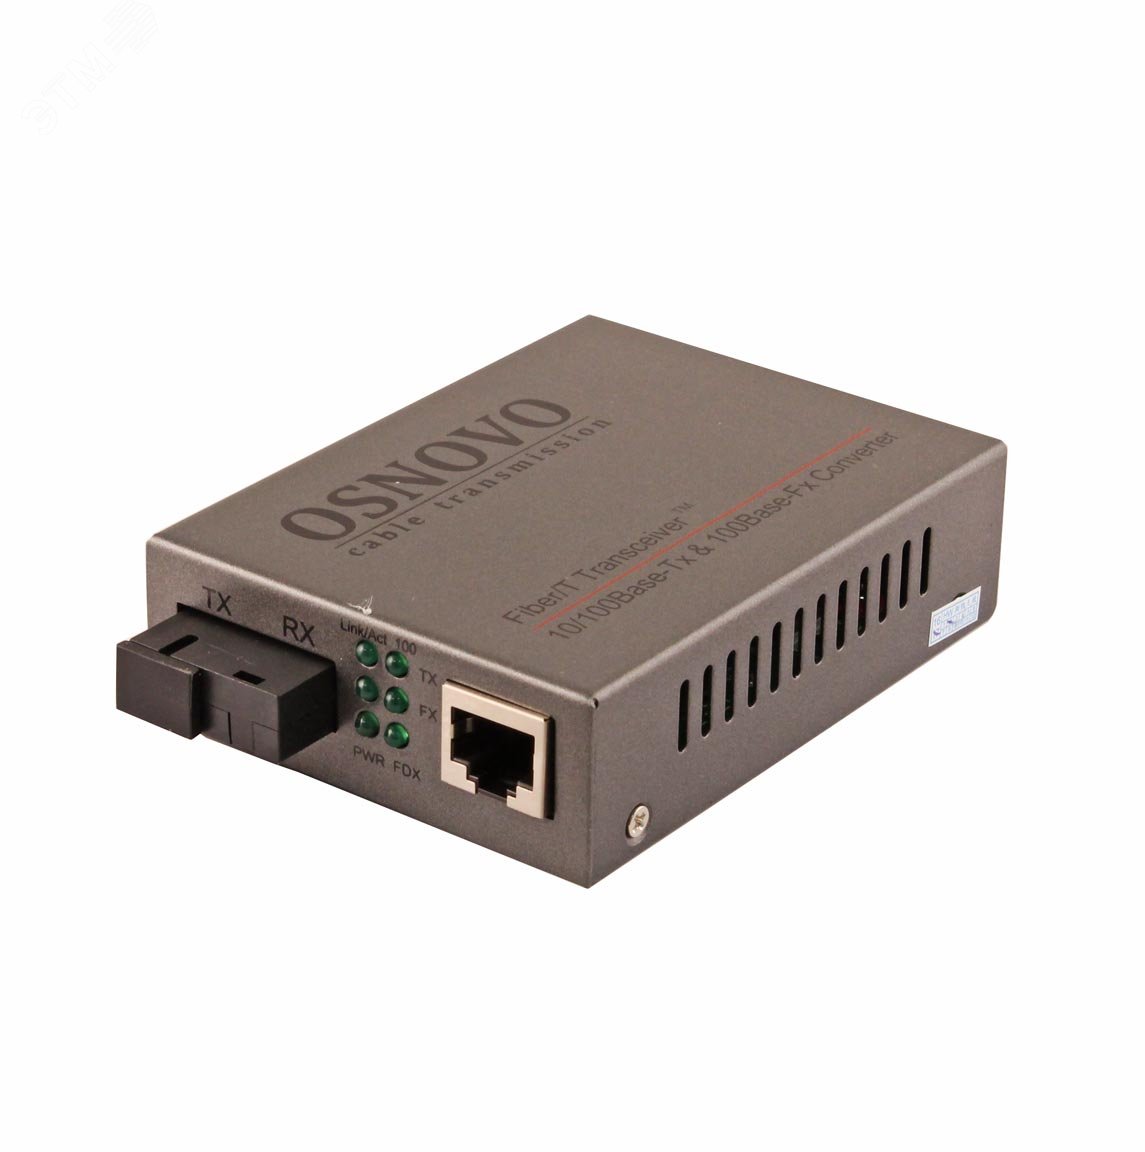 Медиаконвертер оптический 1хRJ45/SC 10/100 Мб/с, для кабеля до 20 км OMC-100-11S5b OSNOVO - превью